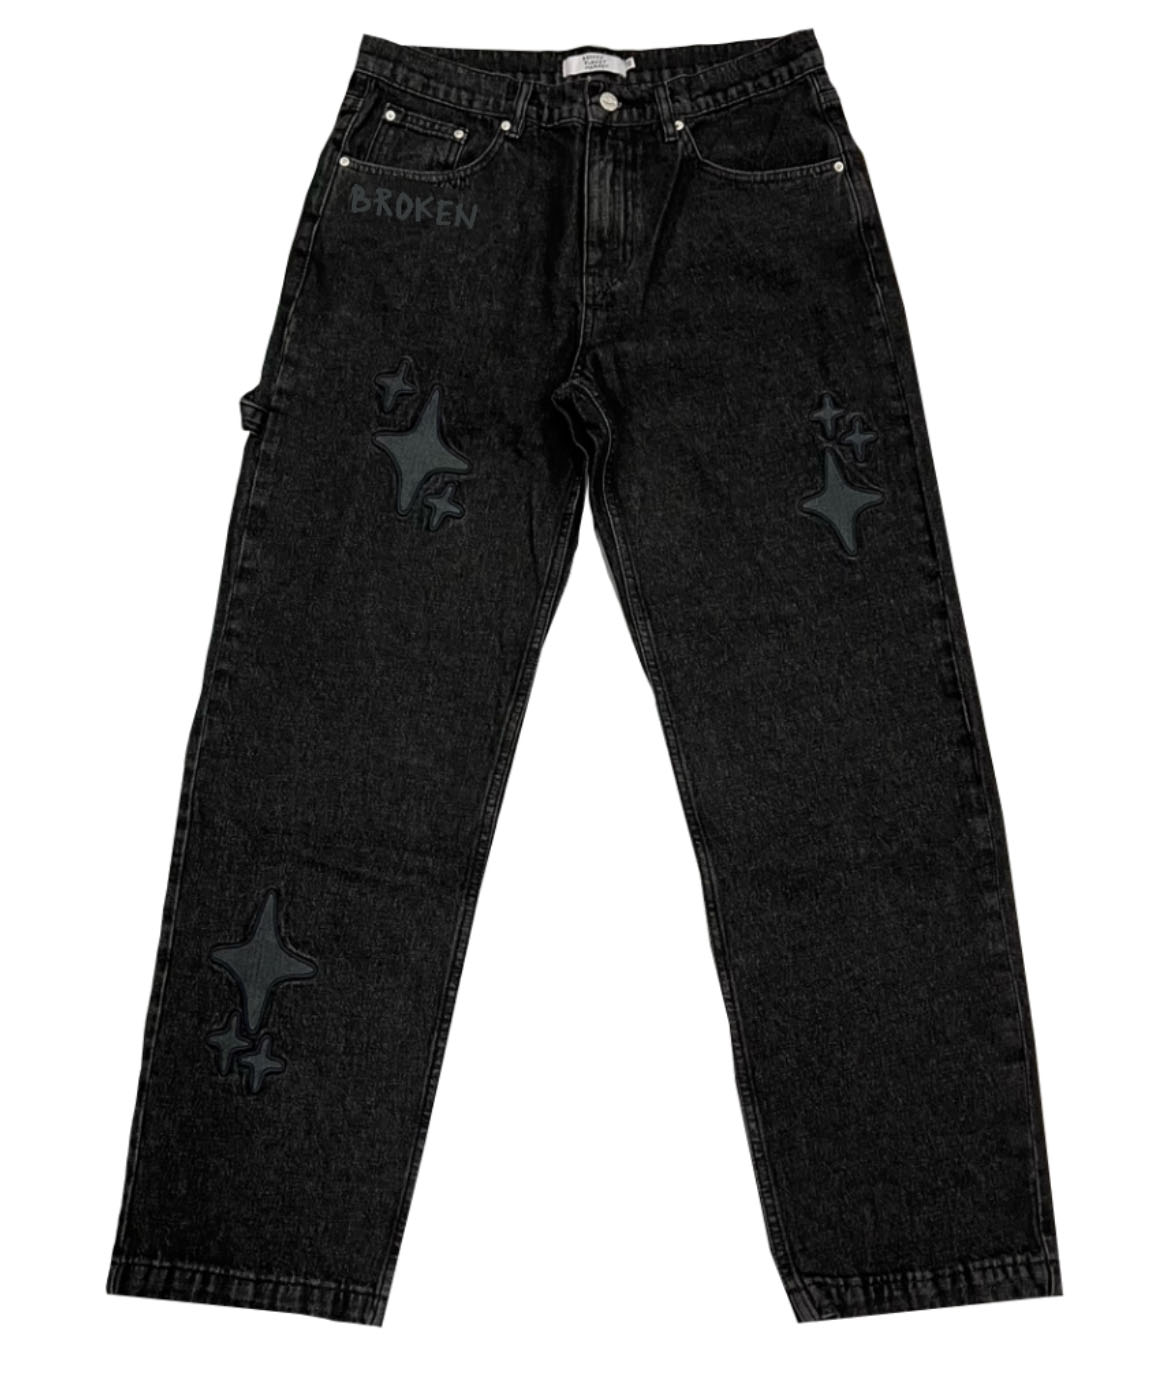 Broken Planet Multi-Star Jeans Washed Black メンズ - FW22 - JP